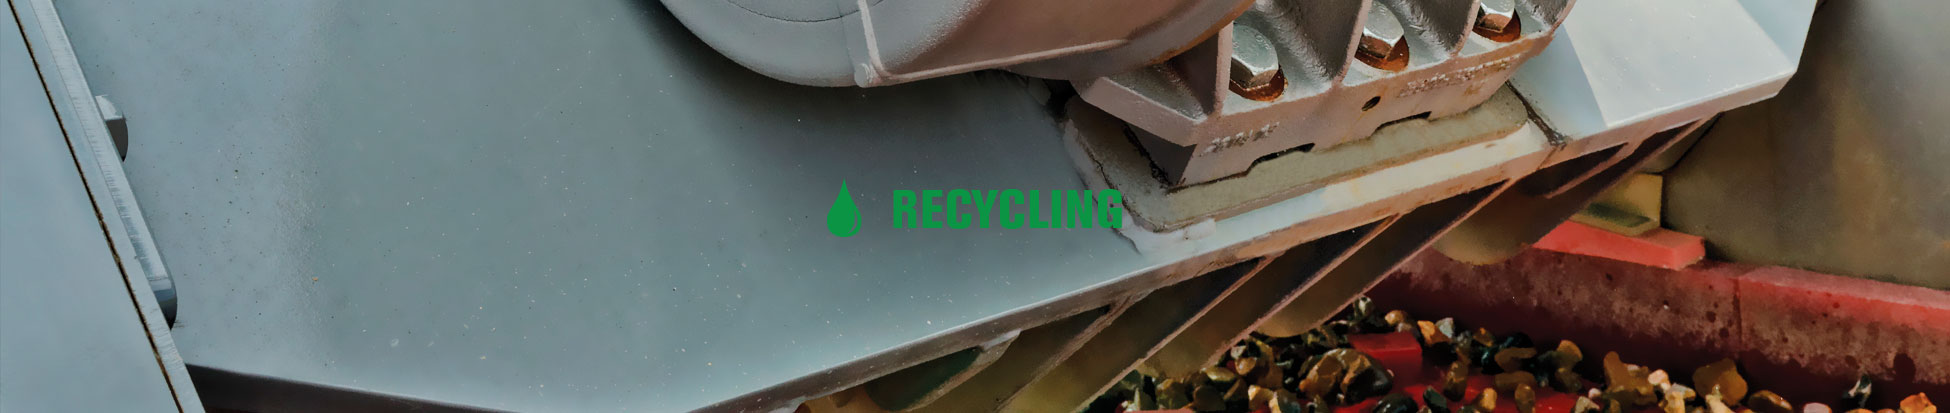 recycling-hero